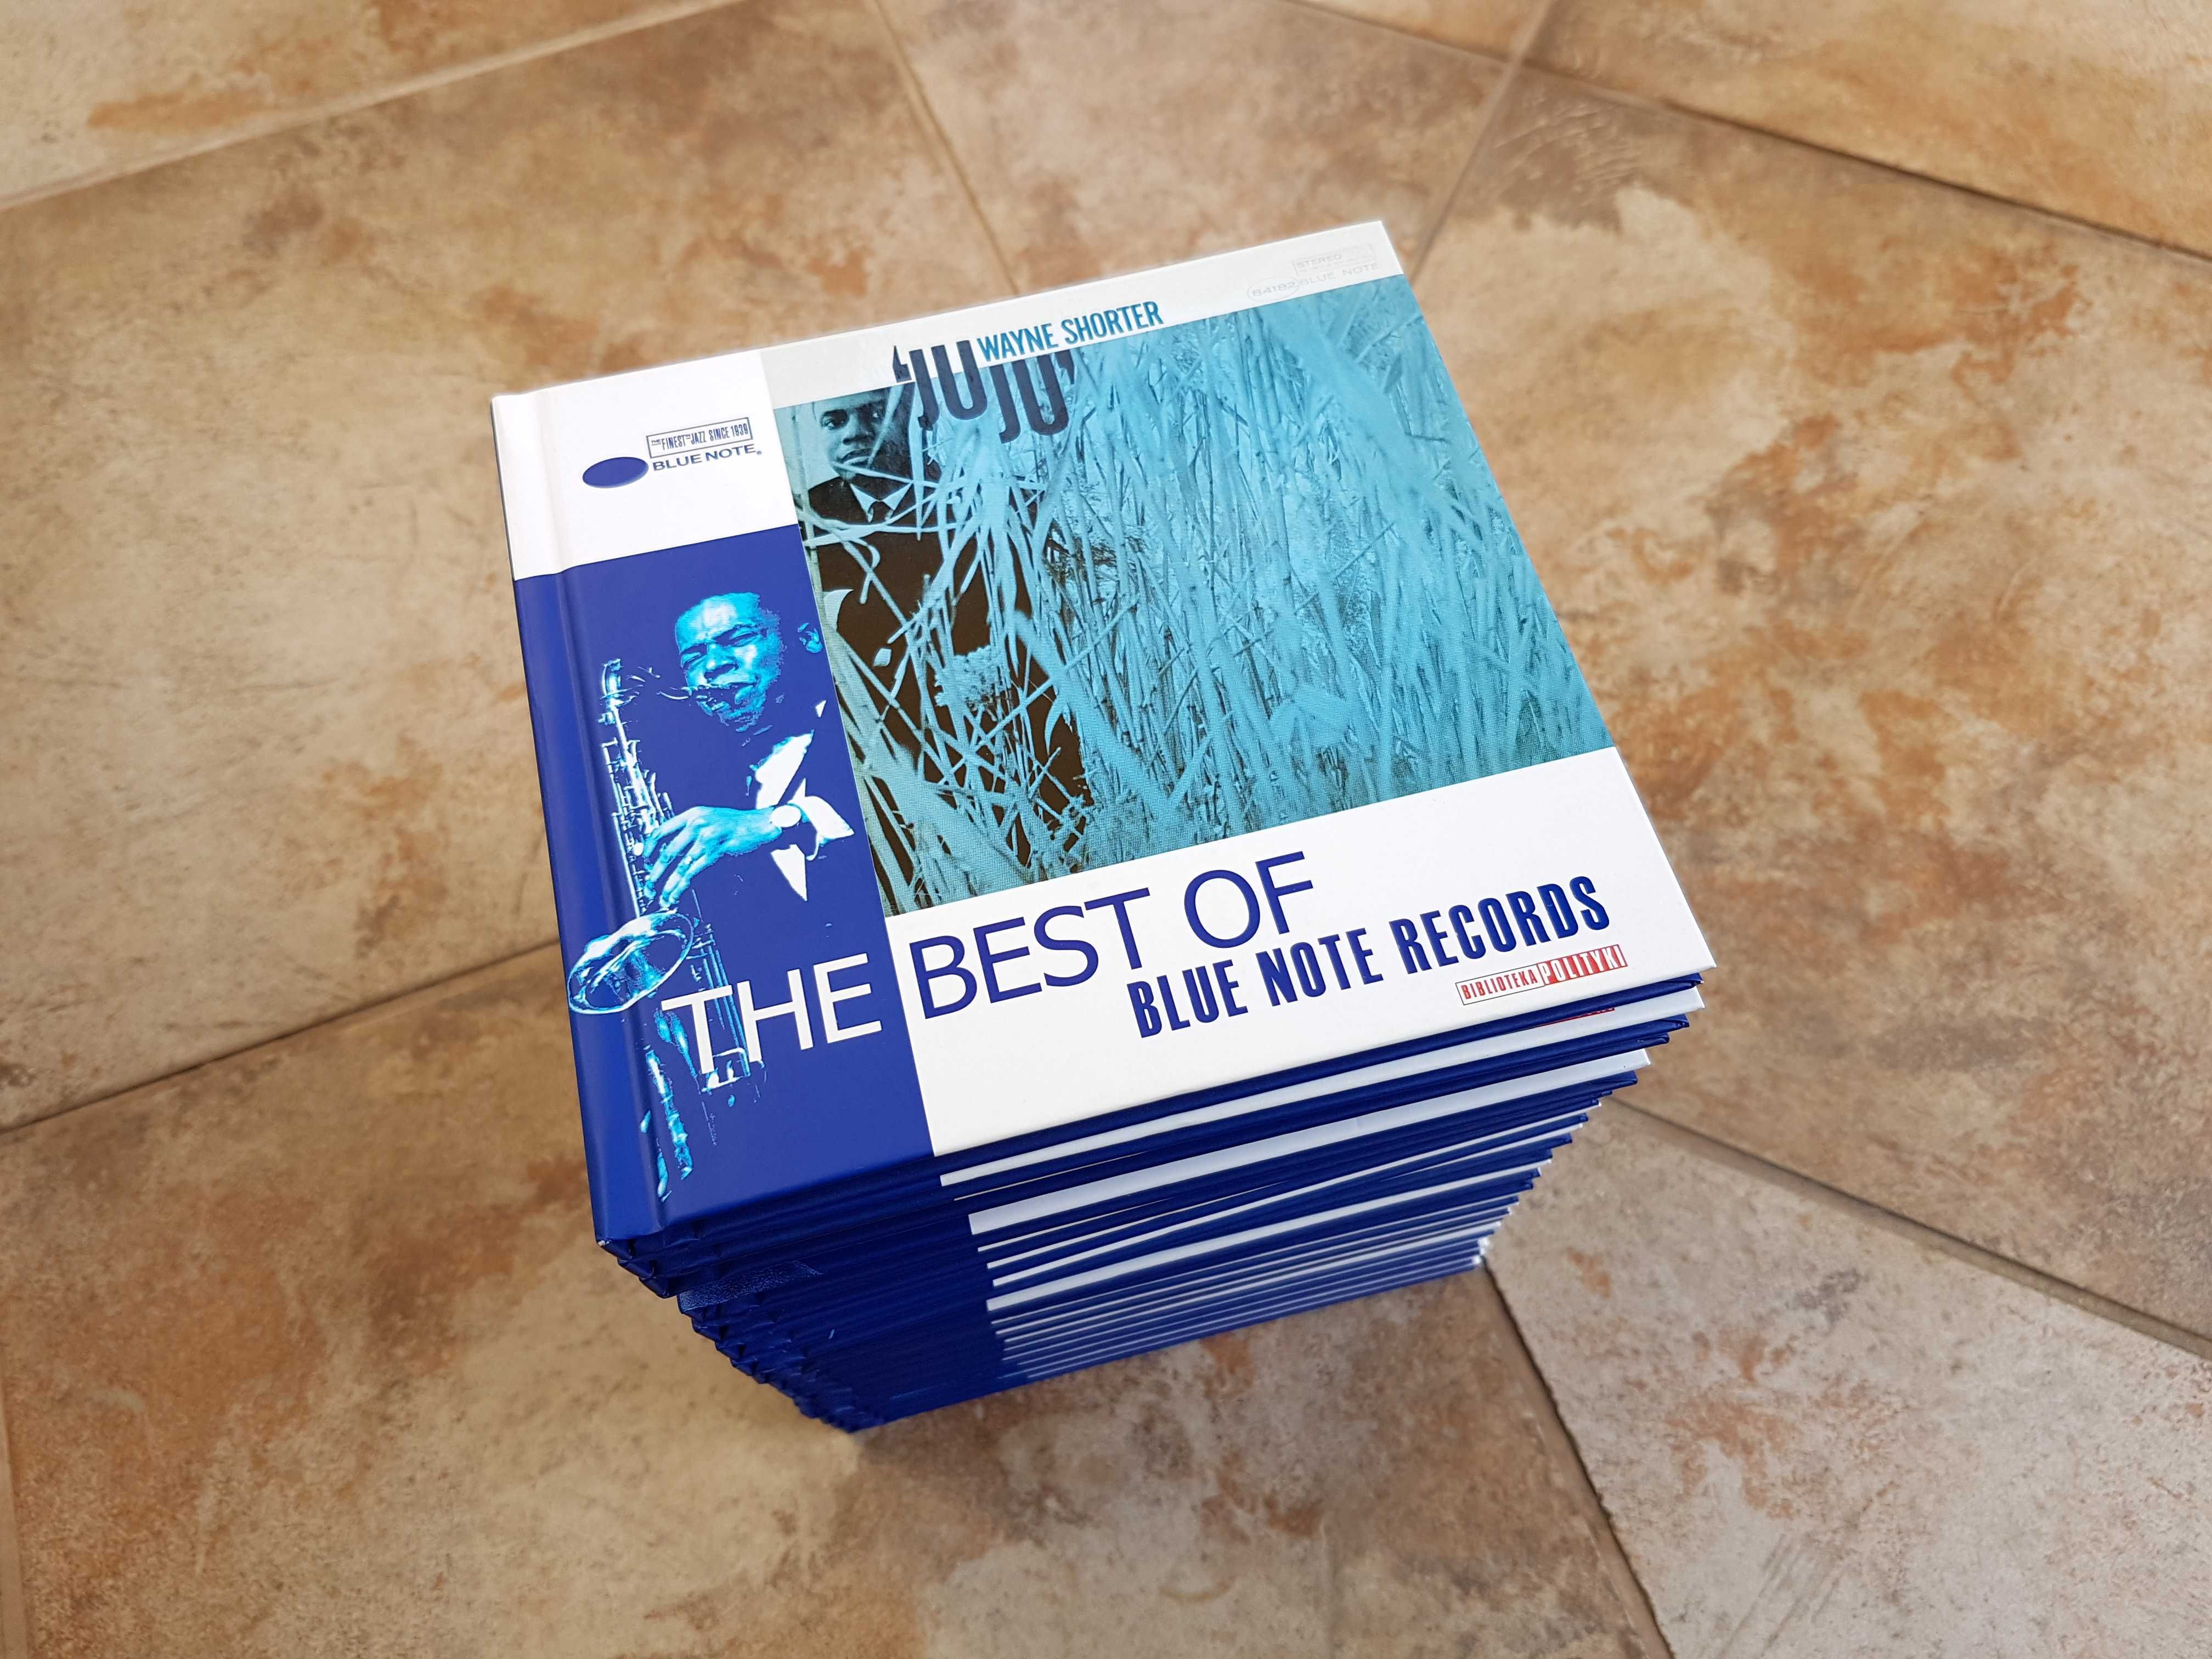 Płyty CD: "The Best of Blue Note Records" cała kolekcja, płyty NOWE !!